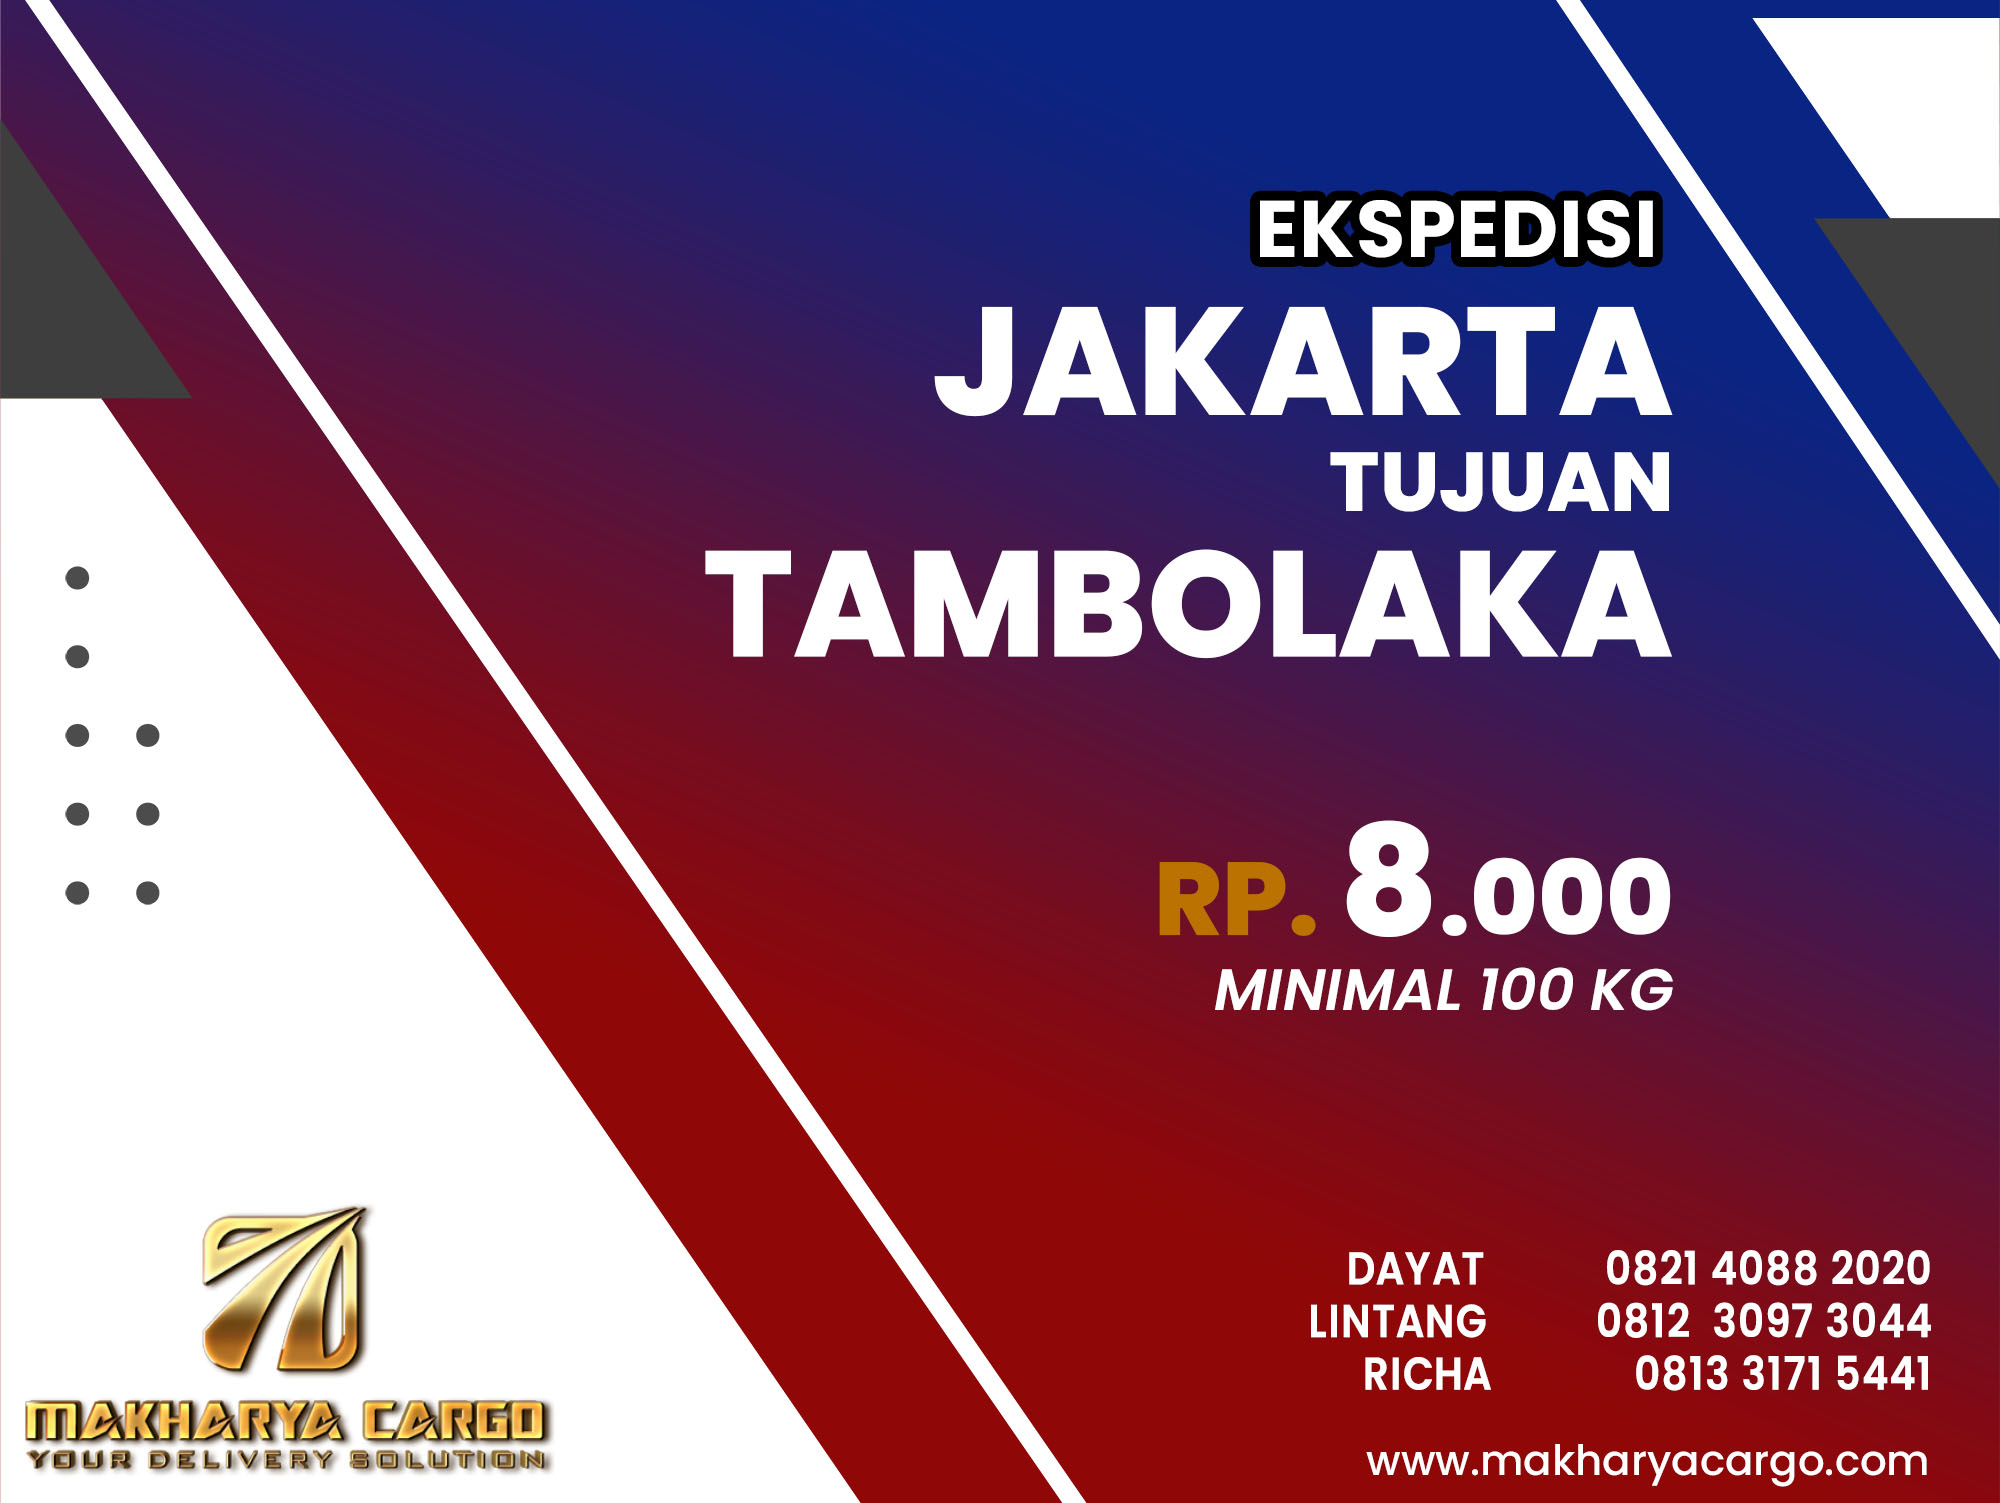 Ekspedisi Jakarta Tambolaka